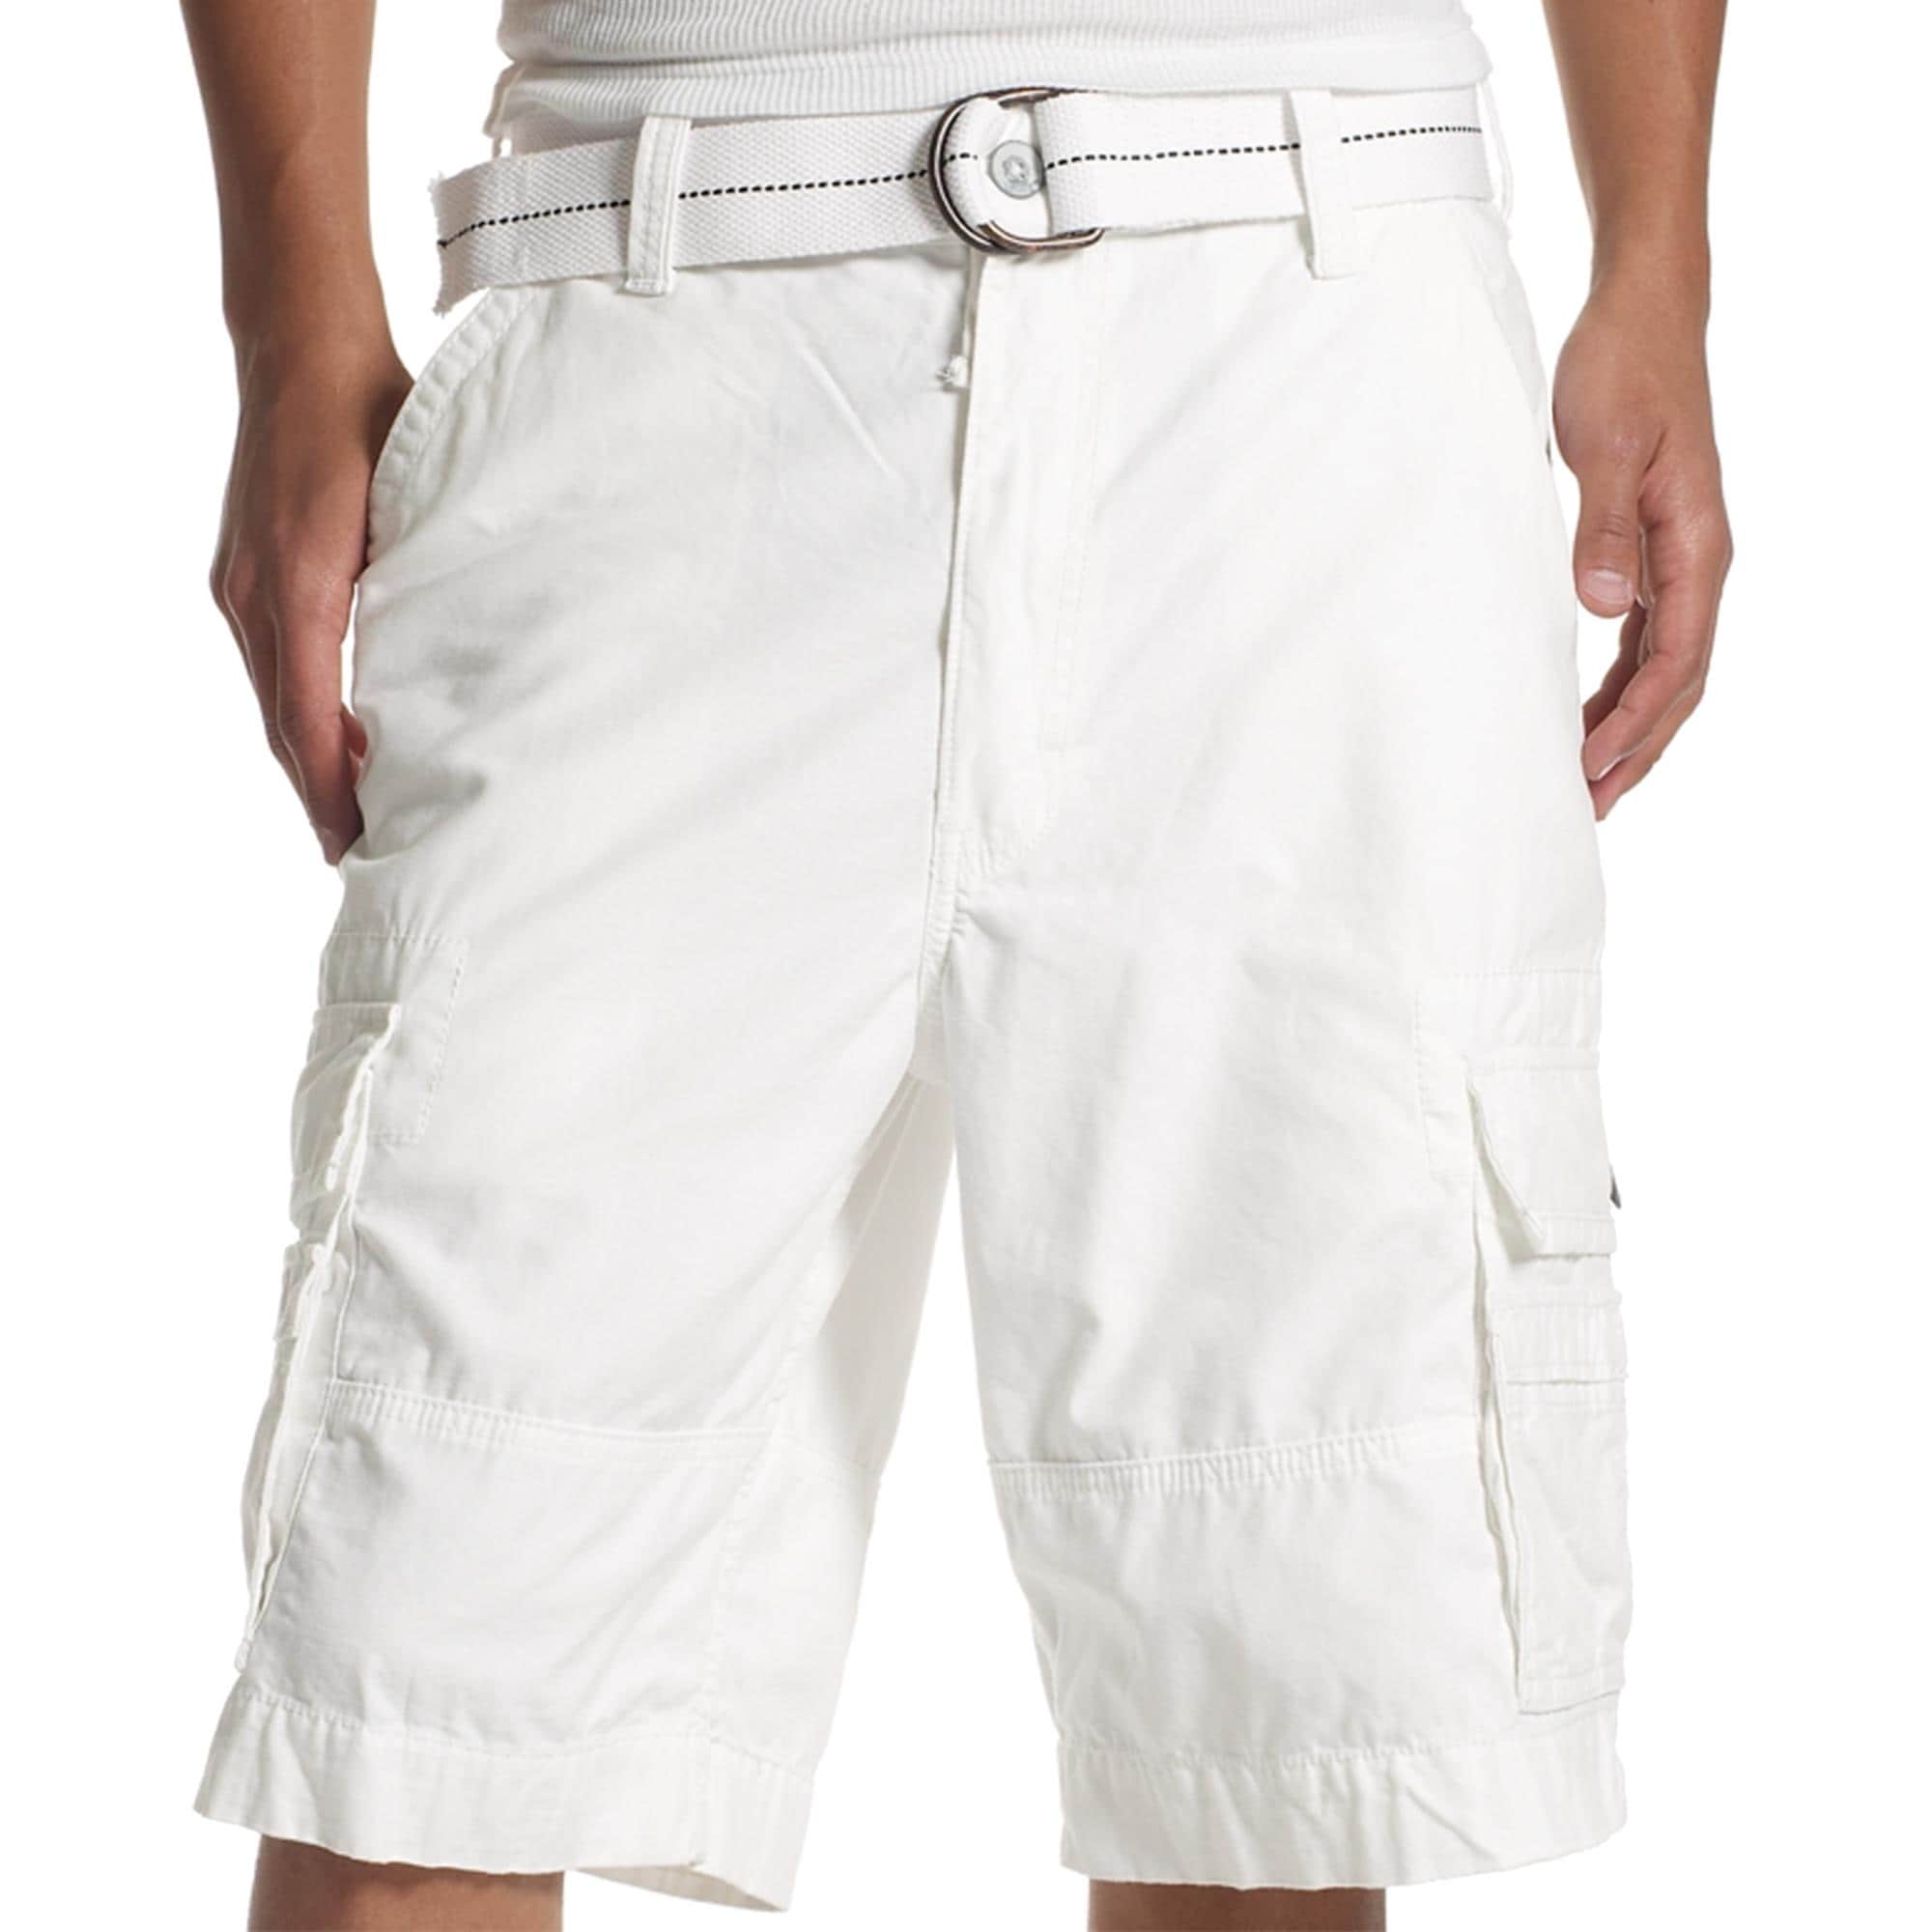 white levi shorts mens cheap online